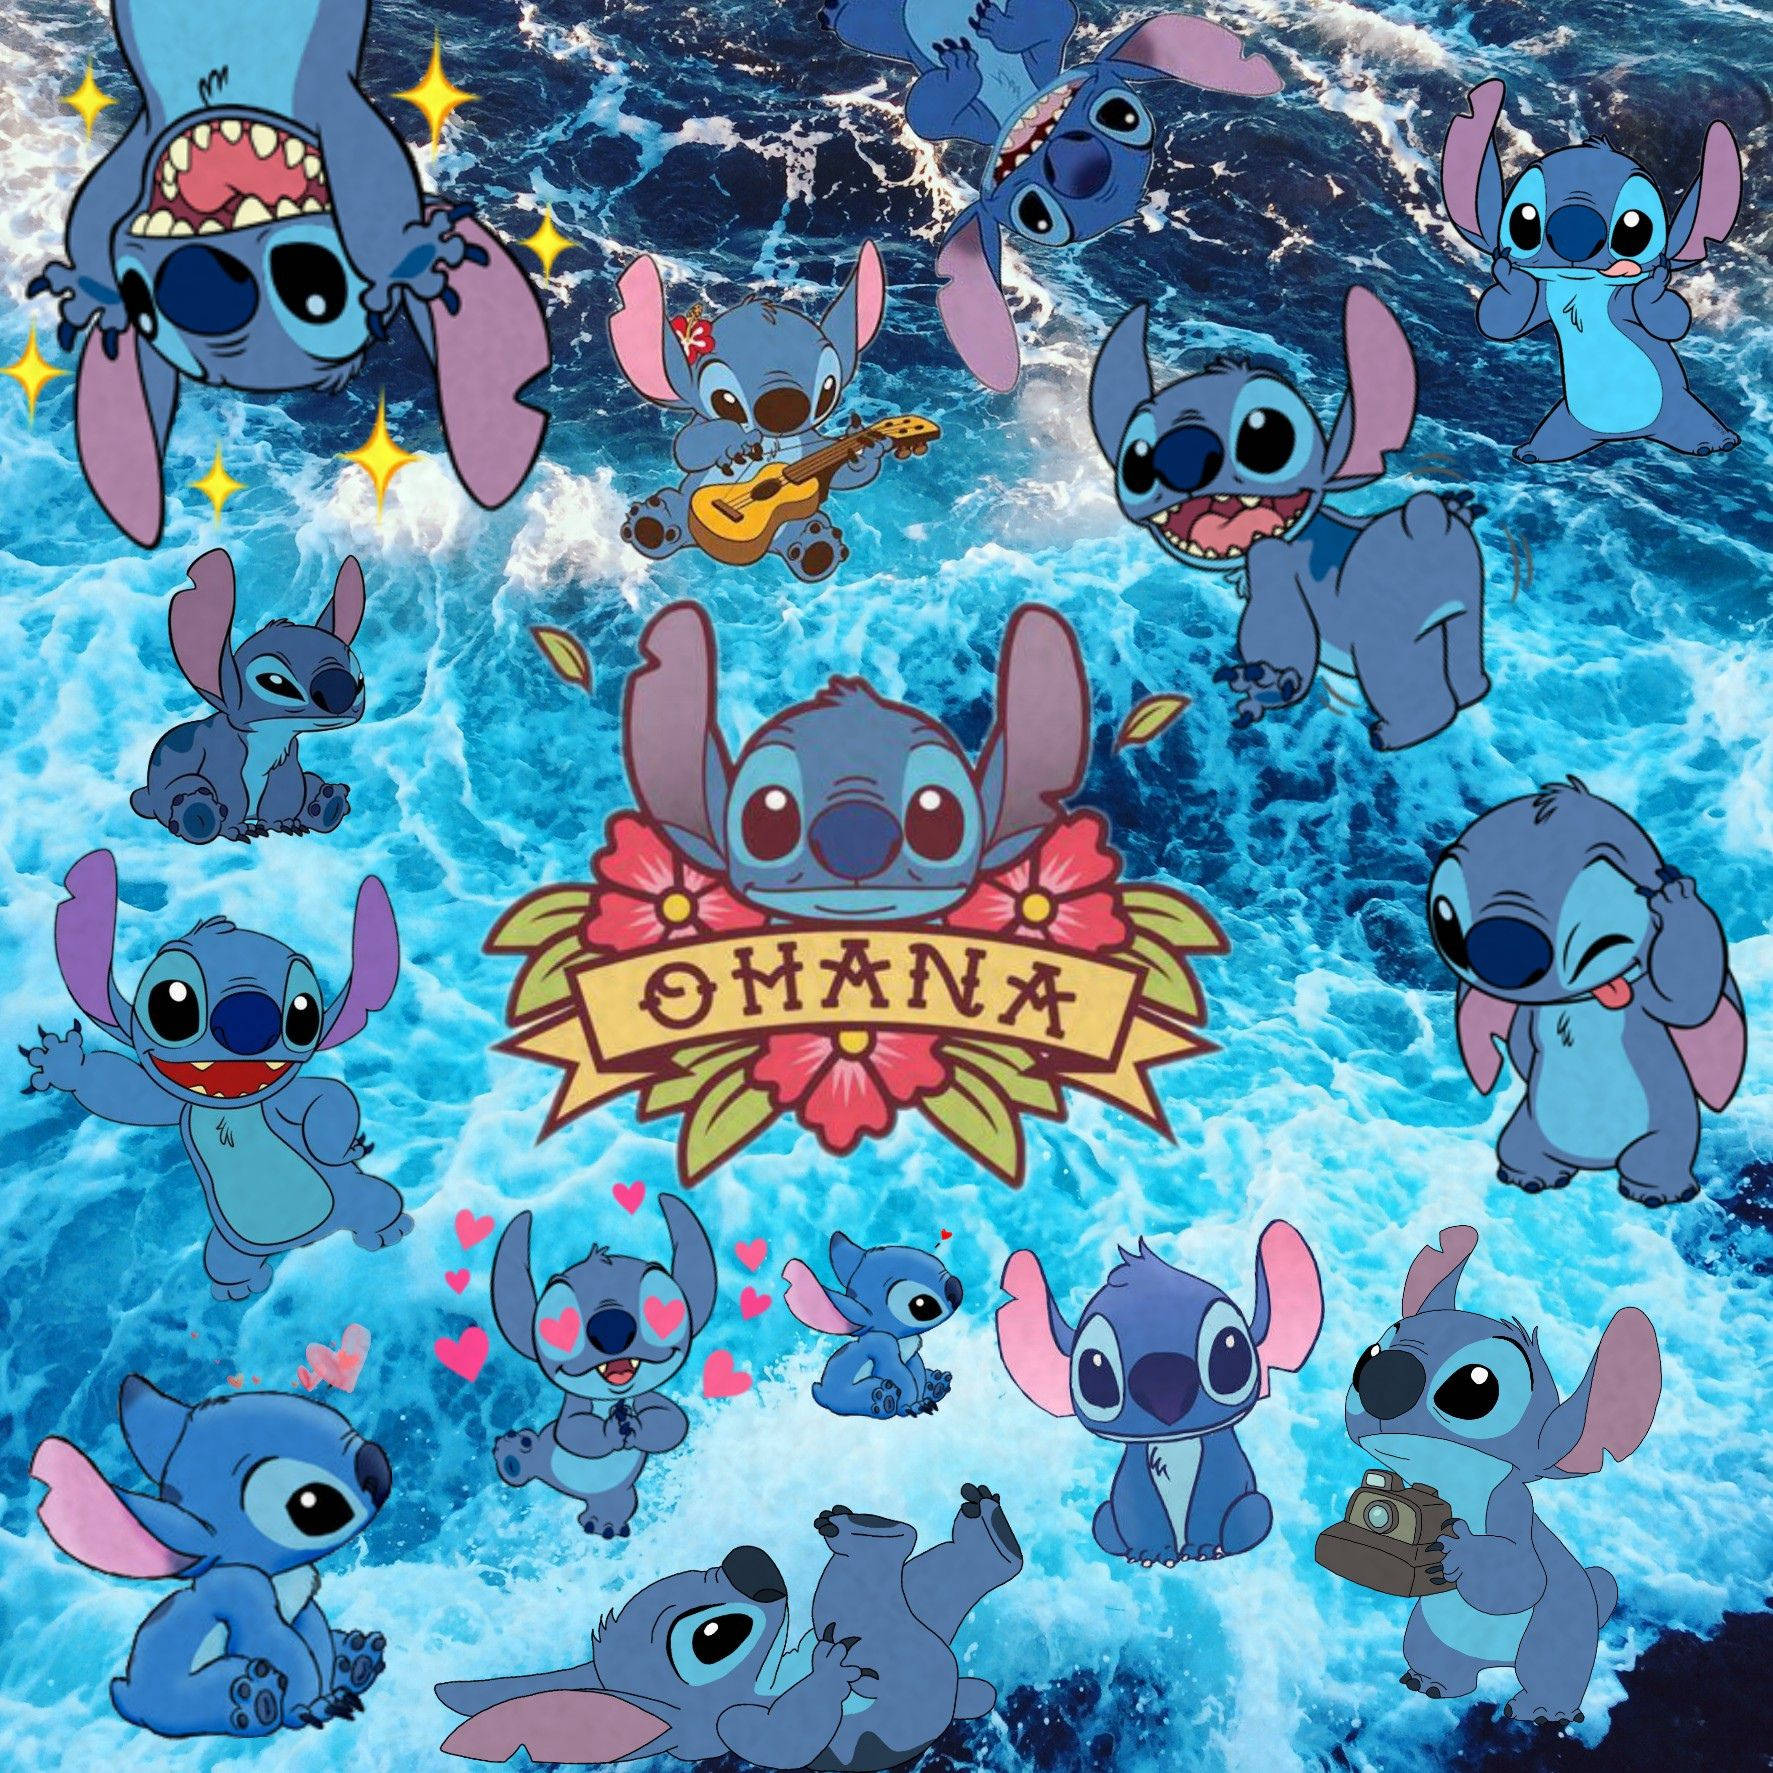 Collagede Stitch Sobre Olas Del Océano. Fondo de pantalla